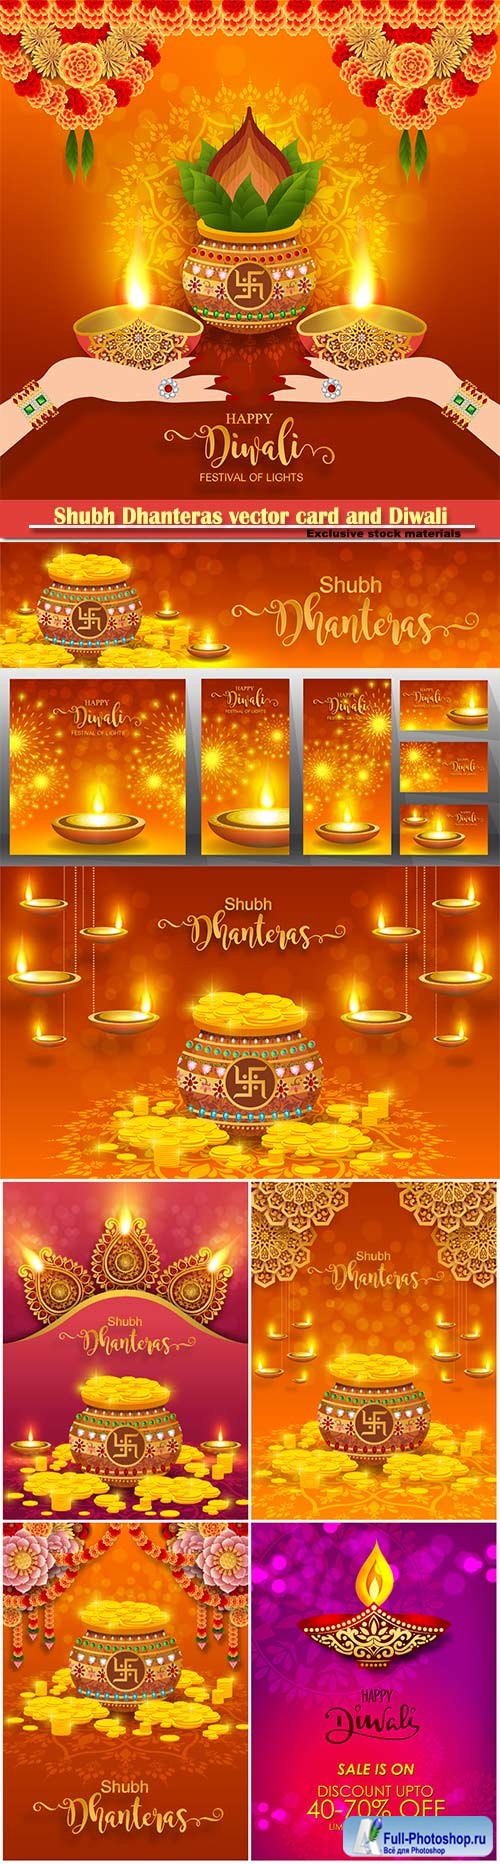 Shubh Dhanteras festival vector card and Diwali vector design